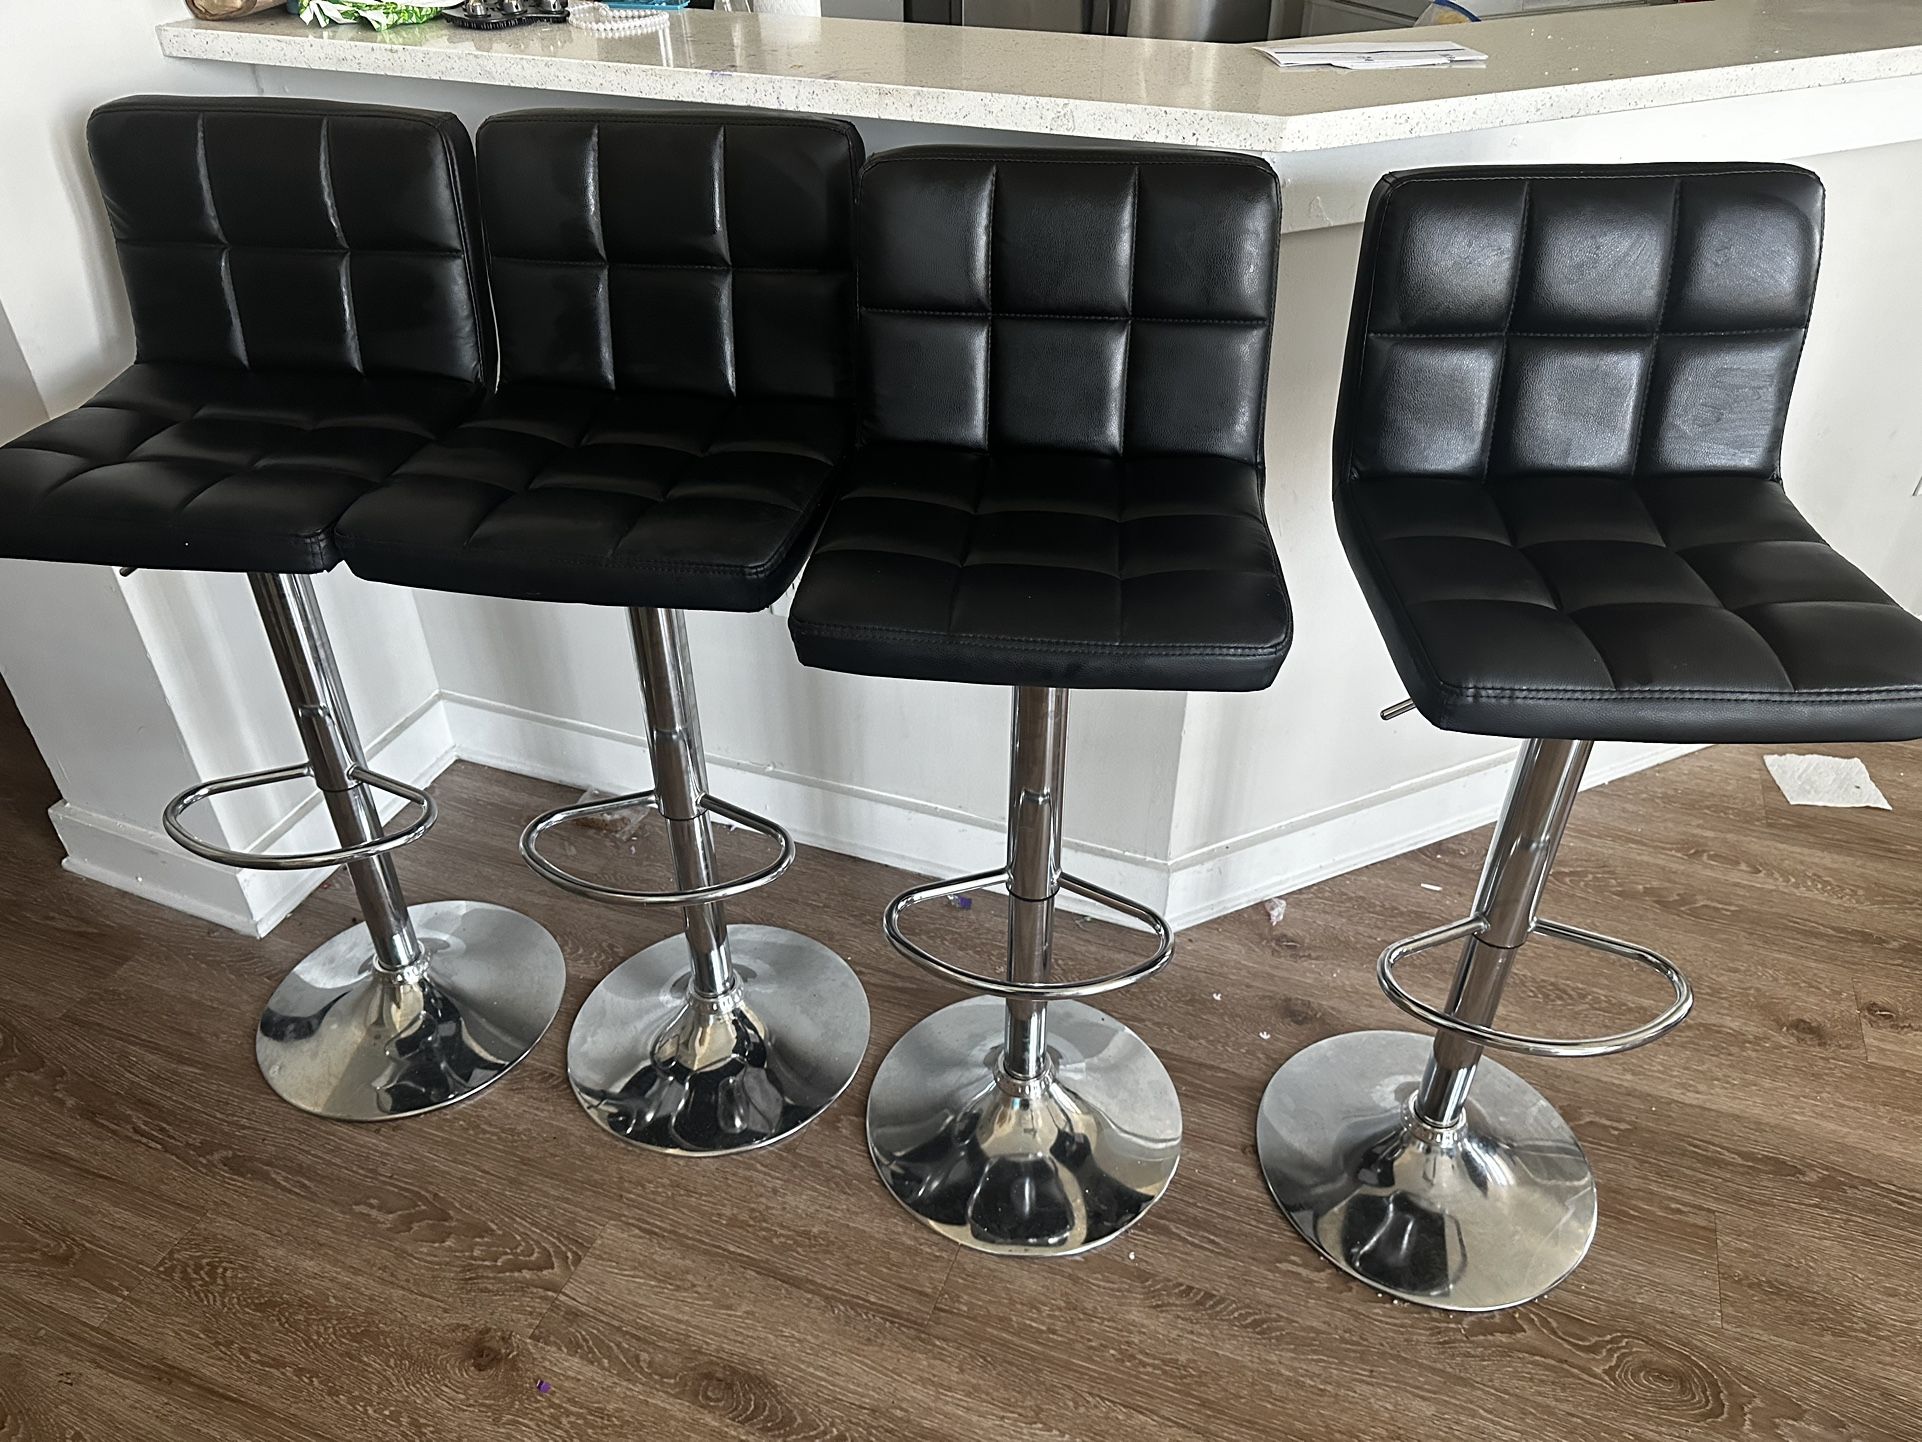 Bar stool Chairs